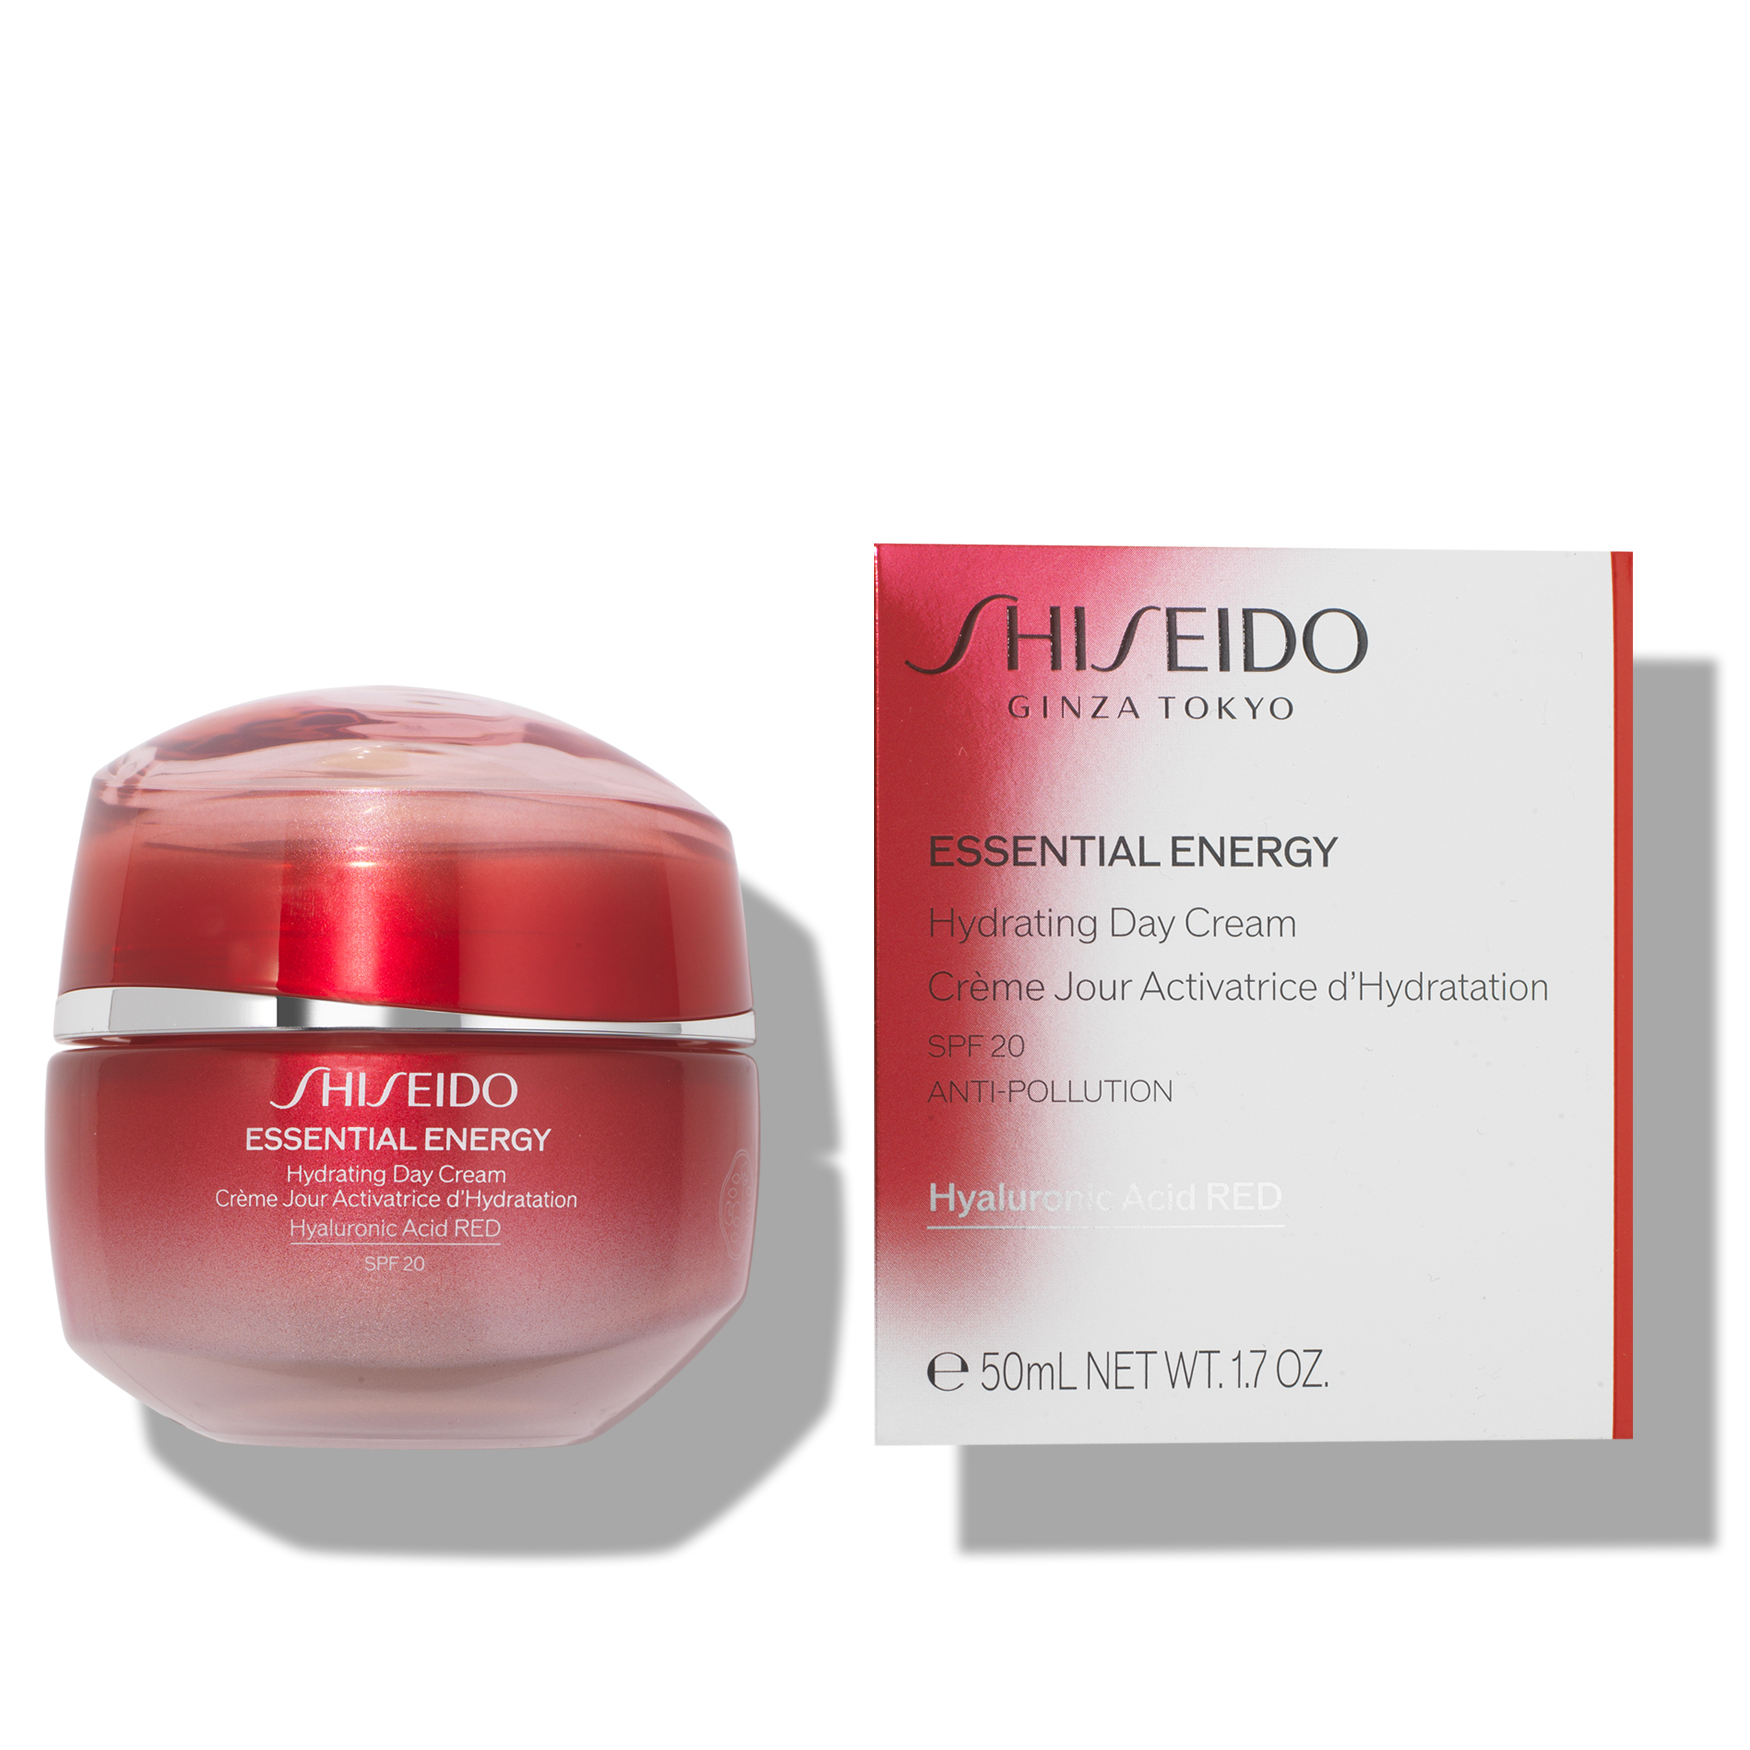 Шисейдо Essential Energy Hydrating Cream. Shiseido Essential Energy. Крем Shiseido суперувлаж. Shiseido Advanced Essential Energy логотип. Крем shiseido отзывы